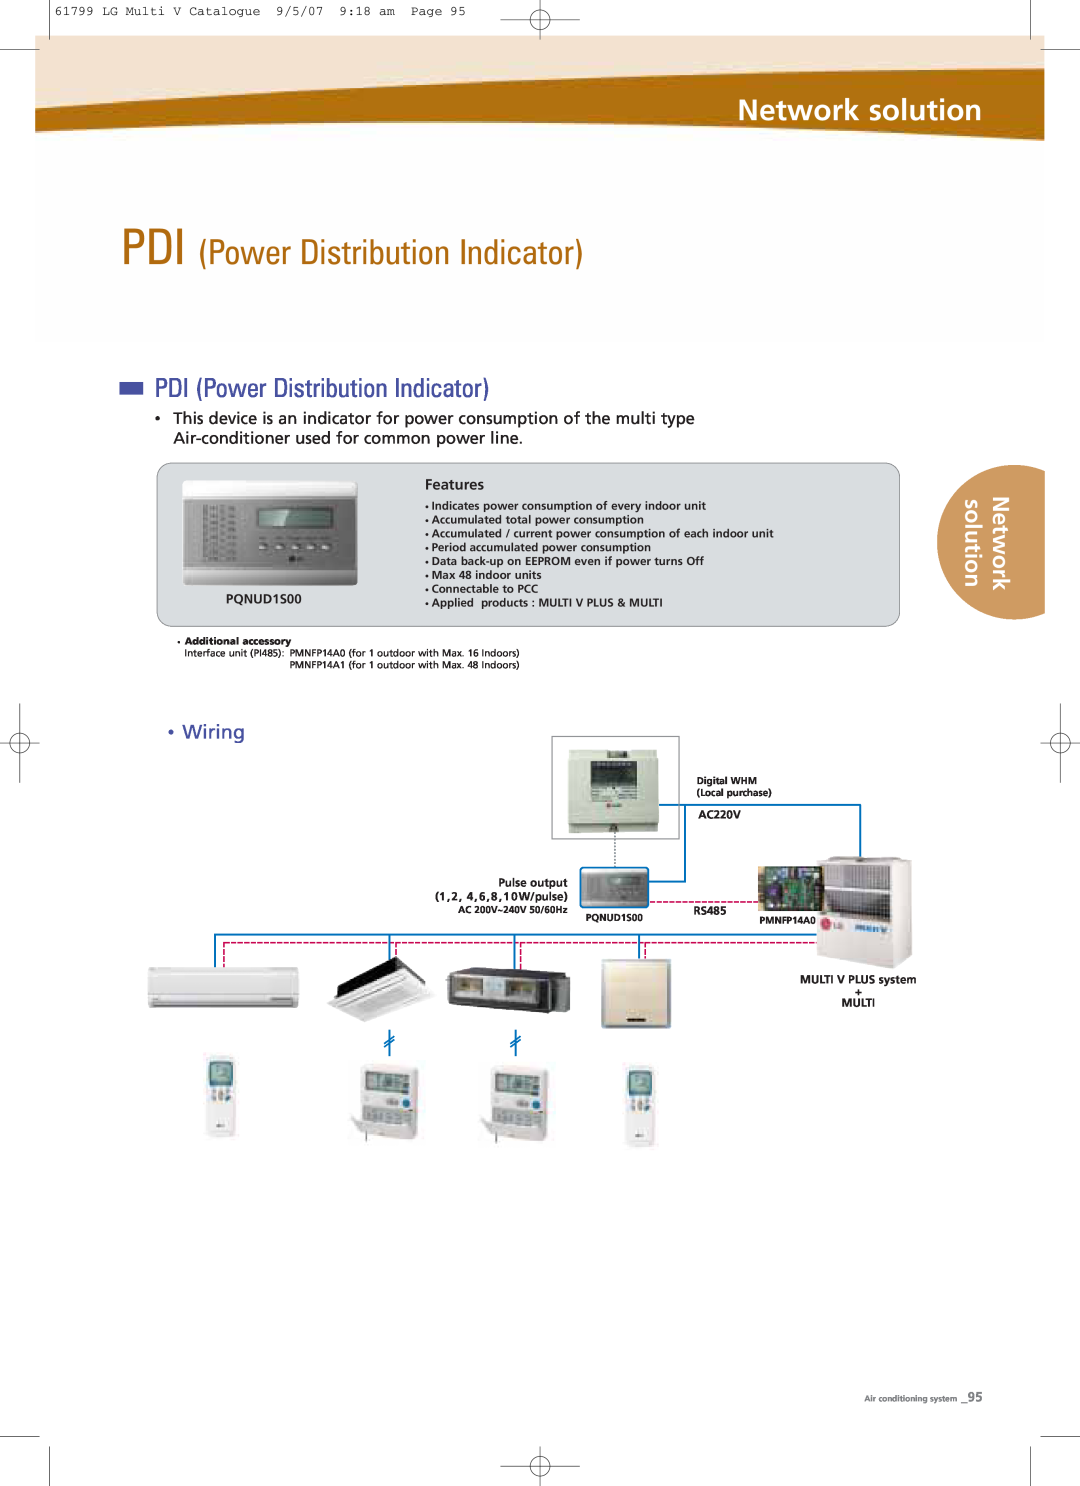 LG Electronics PRHR040 PDI Power Distribution Indicator, Network solution, Wiring, LG Multi V Catalogue 9/5/07 918 am Page 